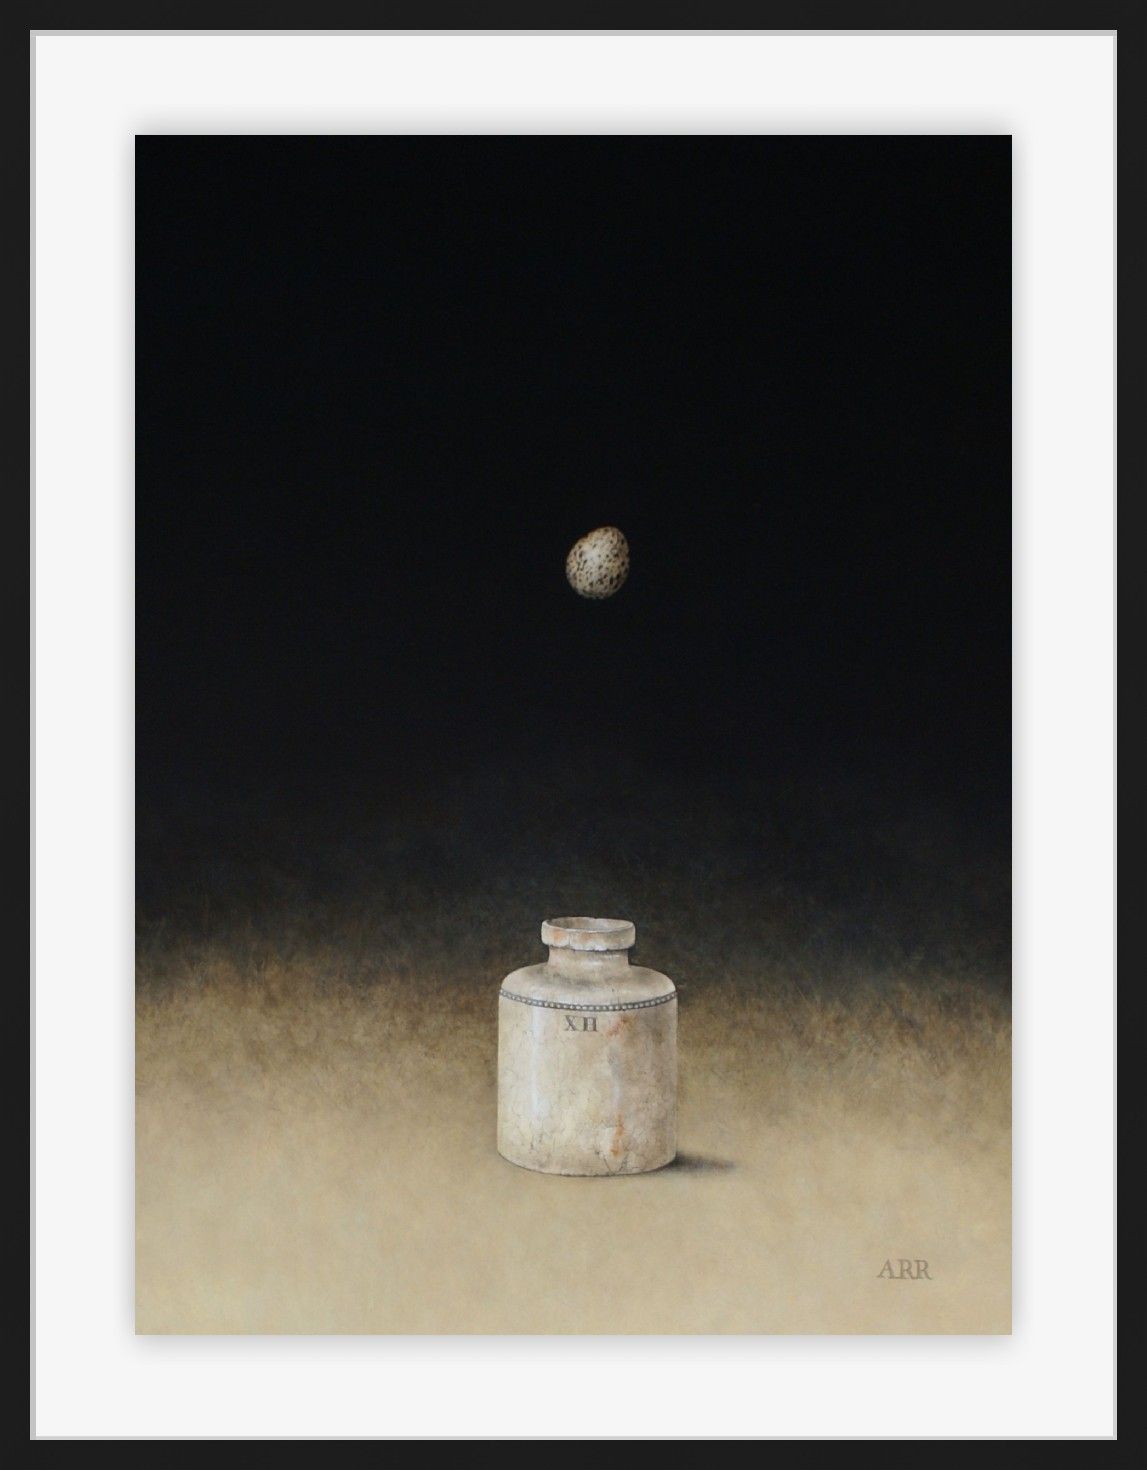 XH Jar with Falling Egg by Alison Rankin